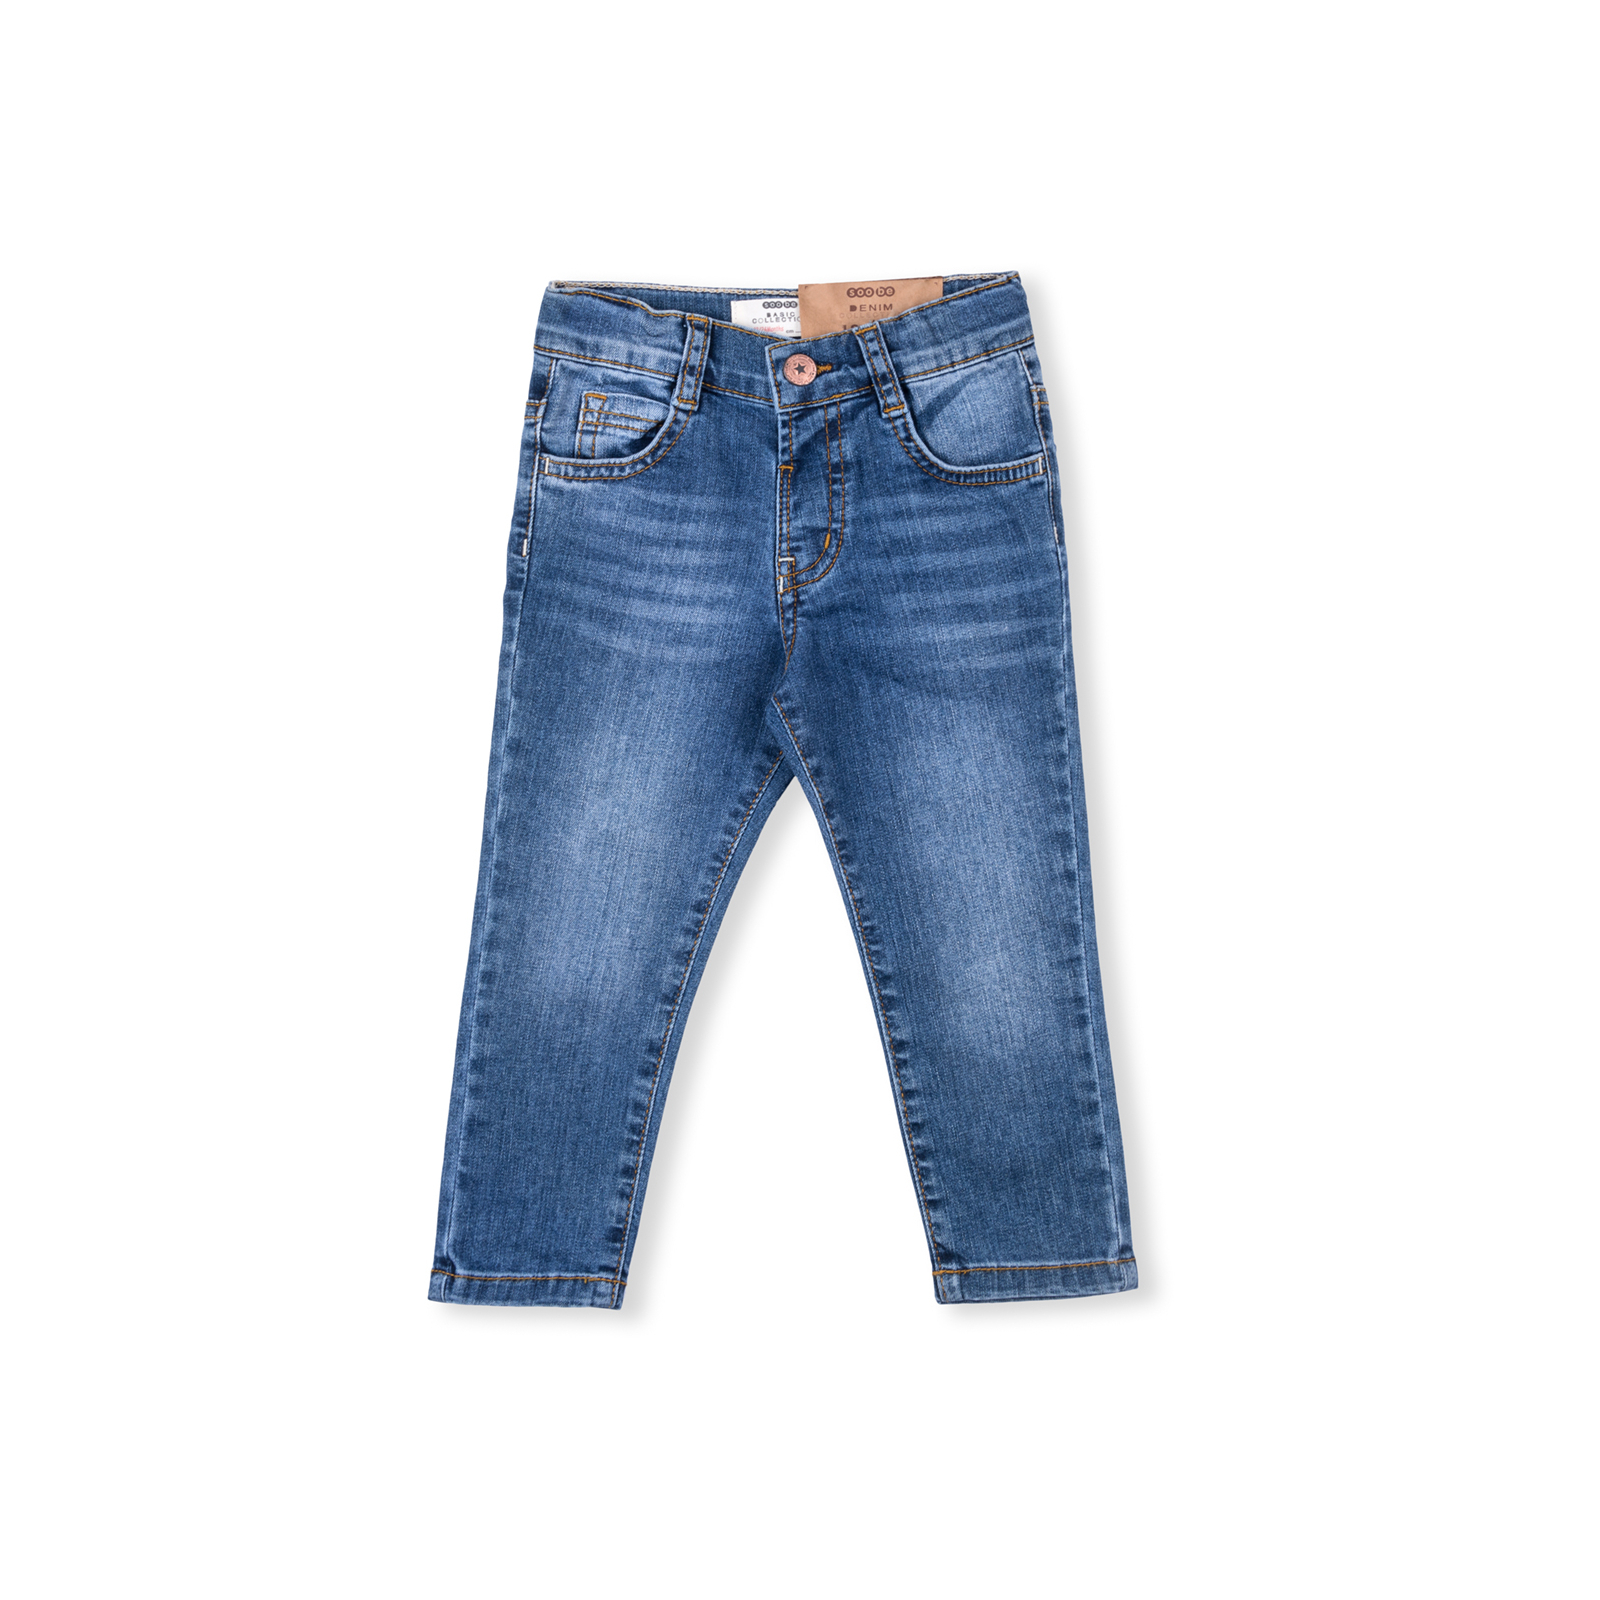 Джинсы Breeze синие (15YECPAN371-80B-jeans)